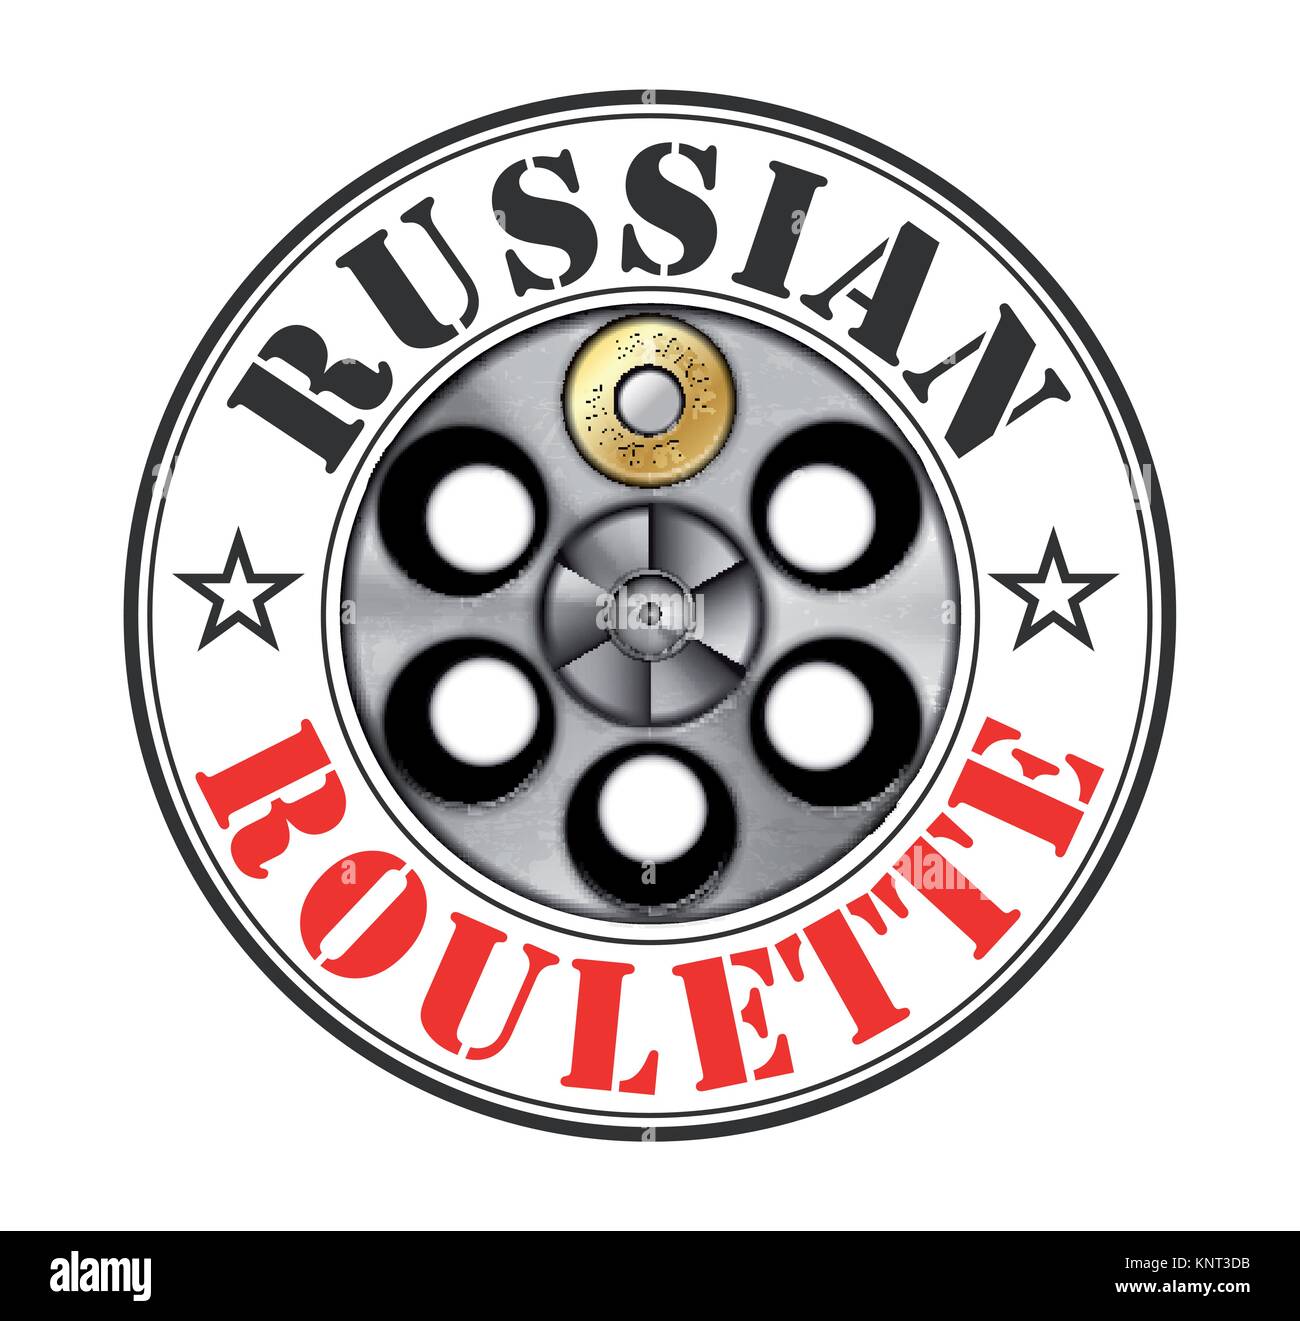 Revolver - russisches roulette Spiel - Risiko Konzept - Lager Abbildung Stock Vektor